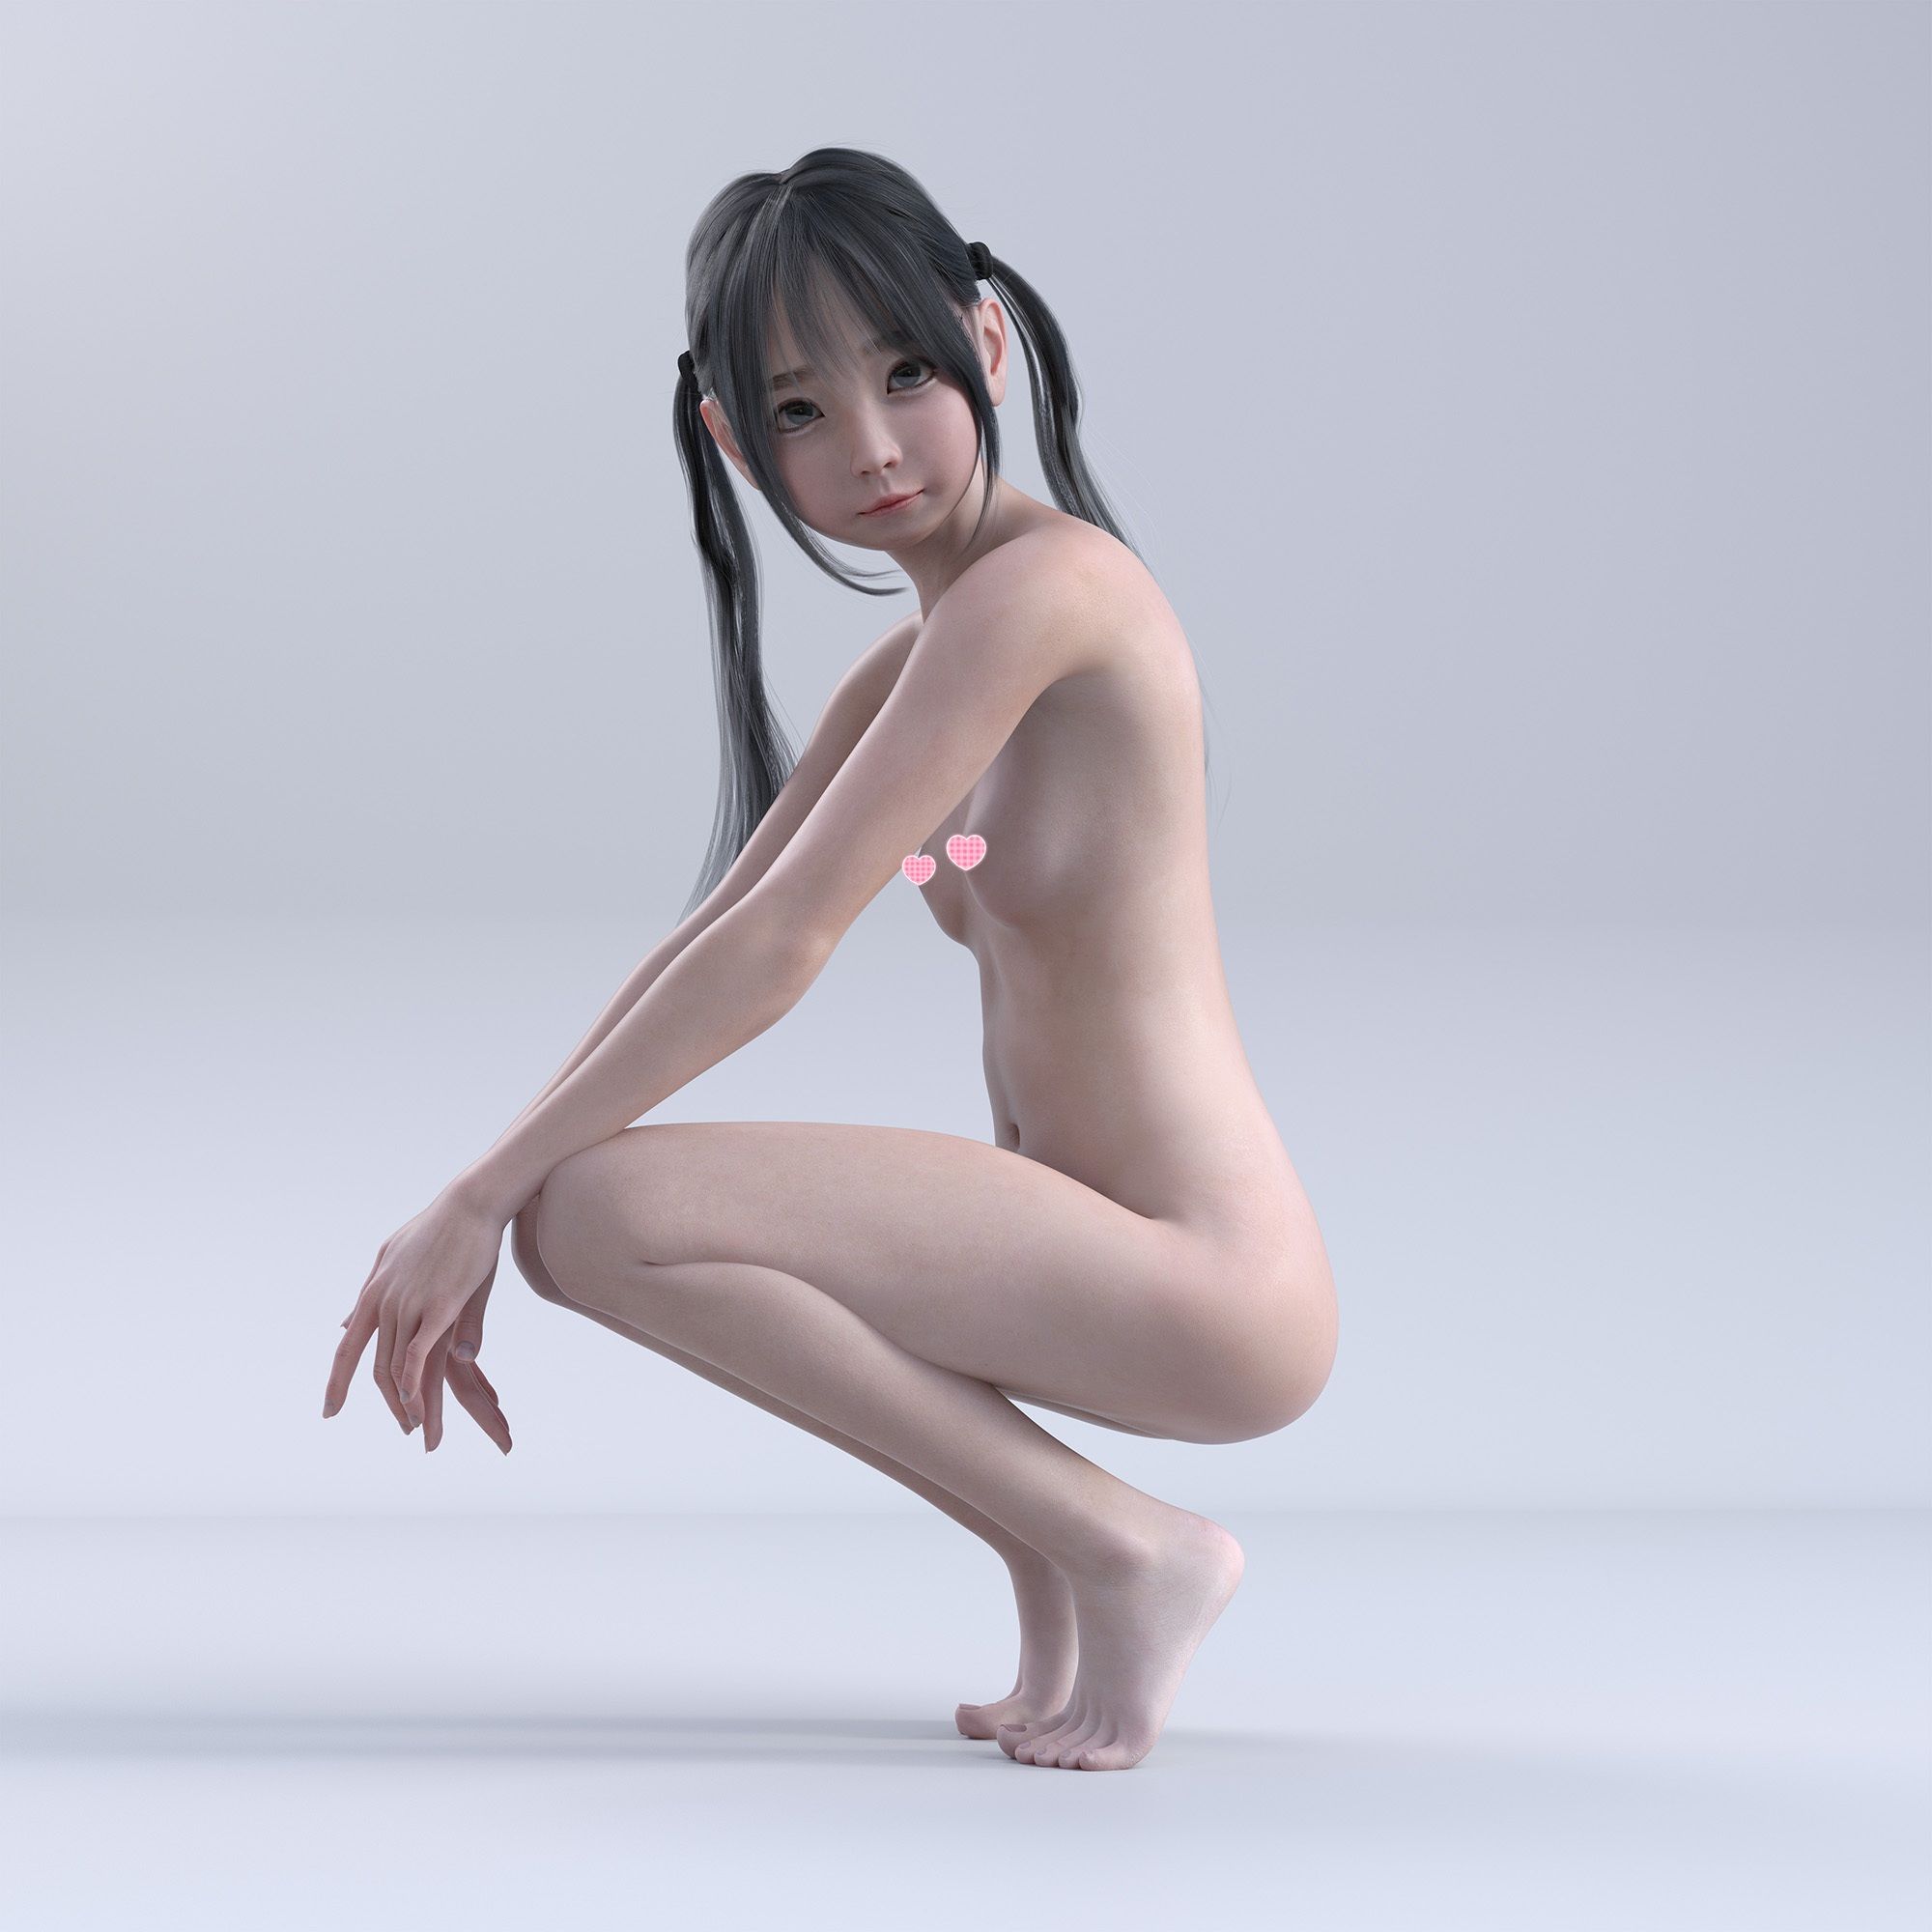 SWEET MEMORY - nude photo book - Model MIYU Vol.3【スイートメモリー ヌードフォトブック】_6